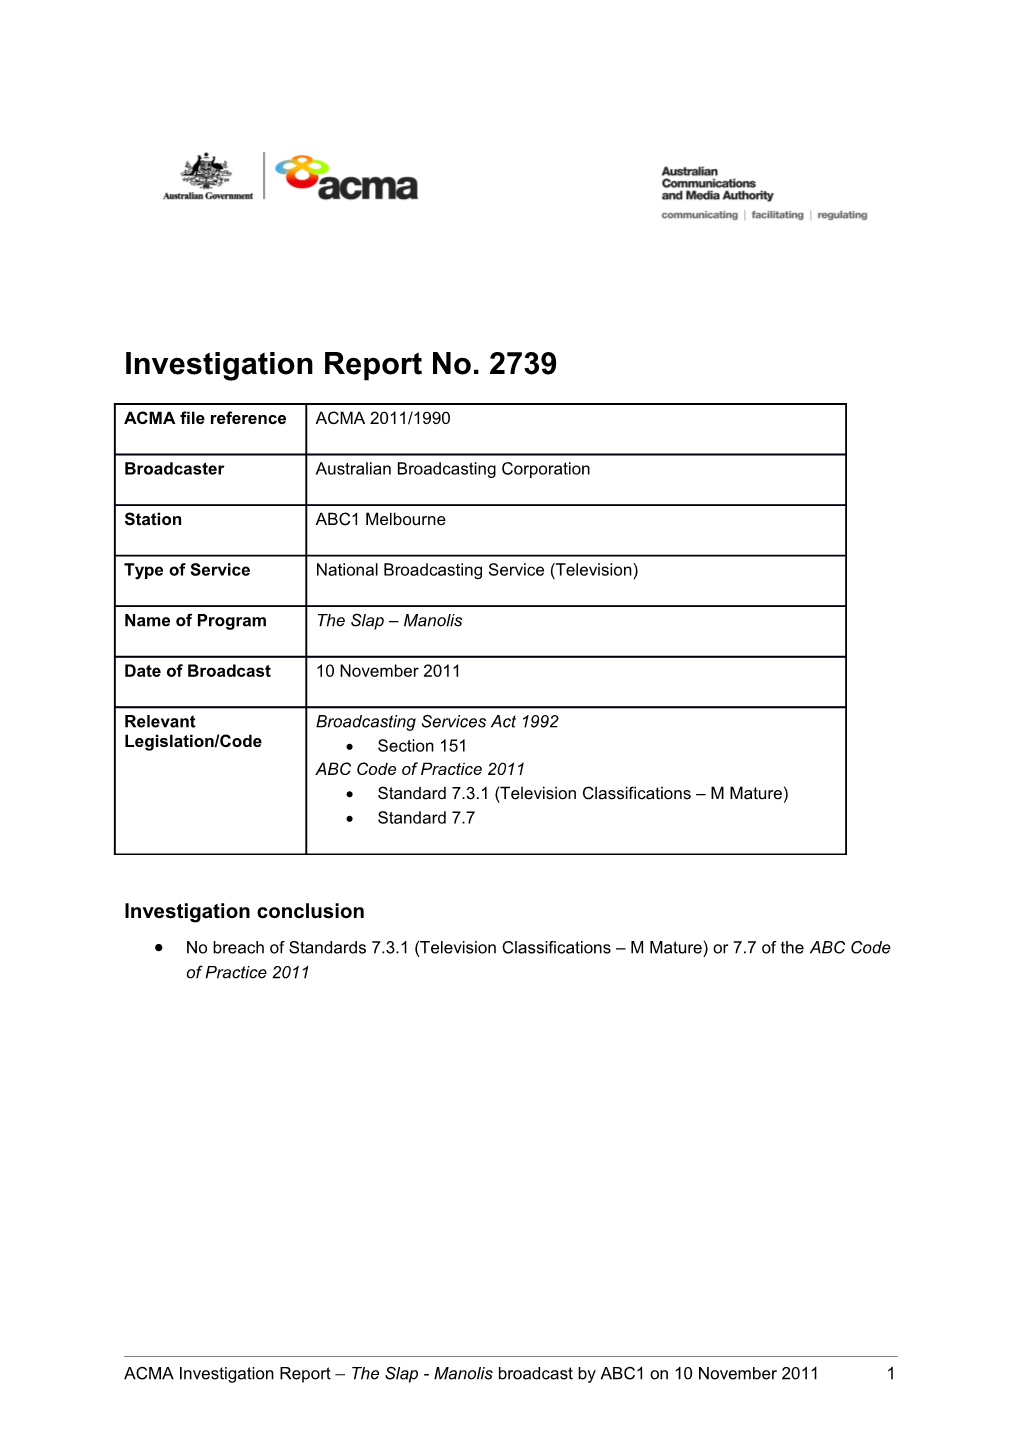 ABC1 Melbourne - ACMA Investigation Report 2739